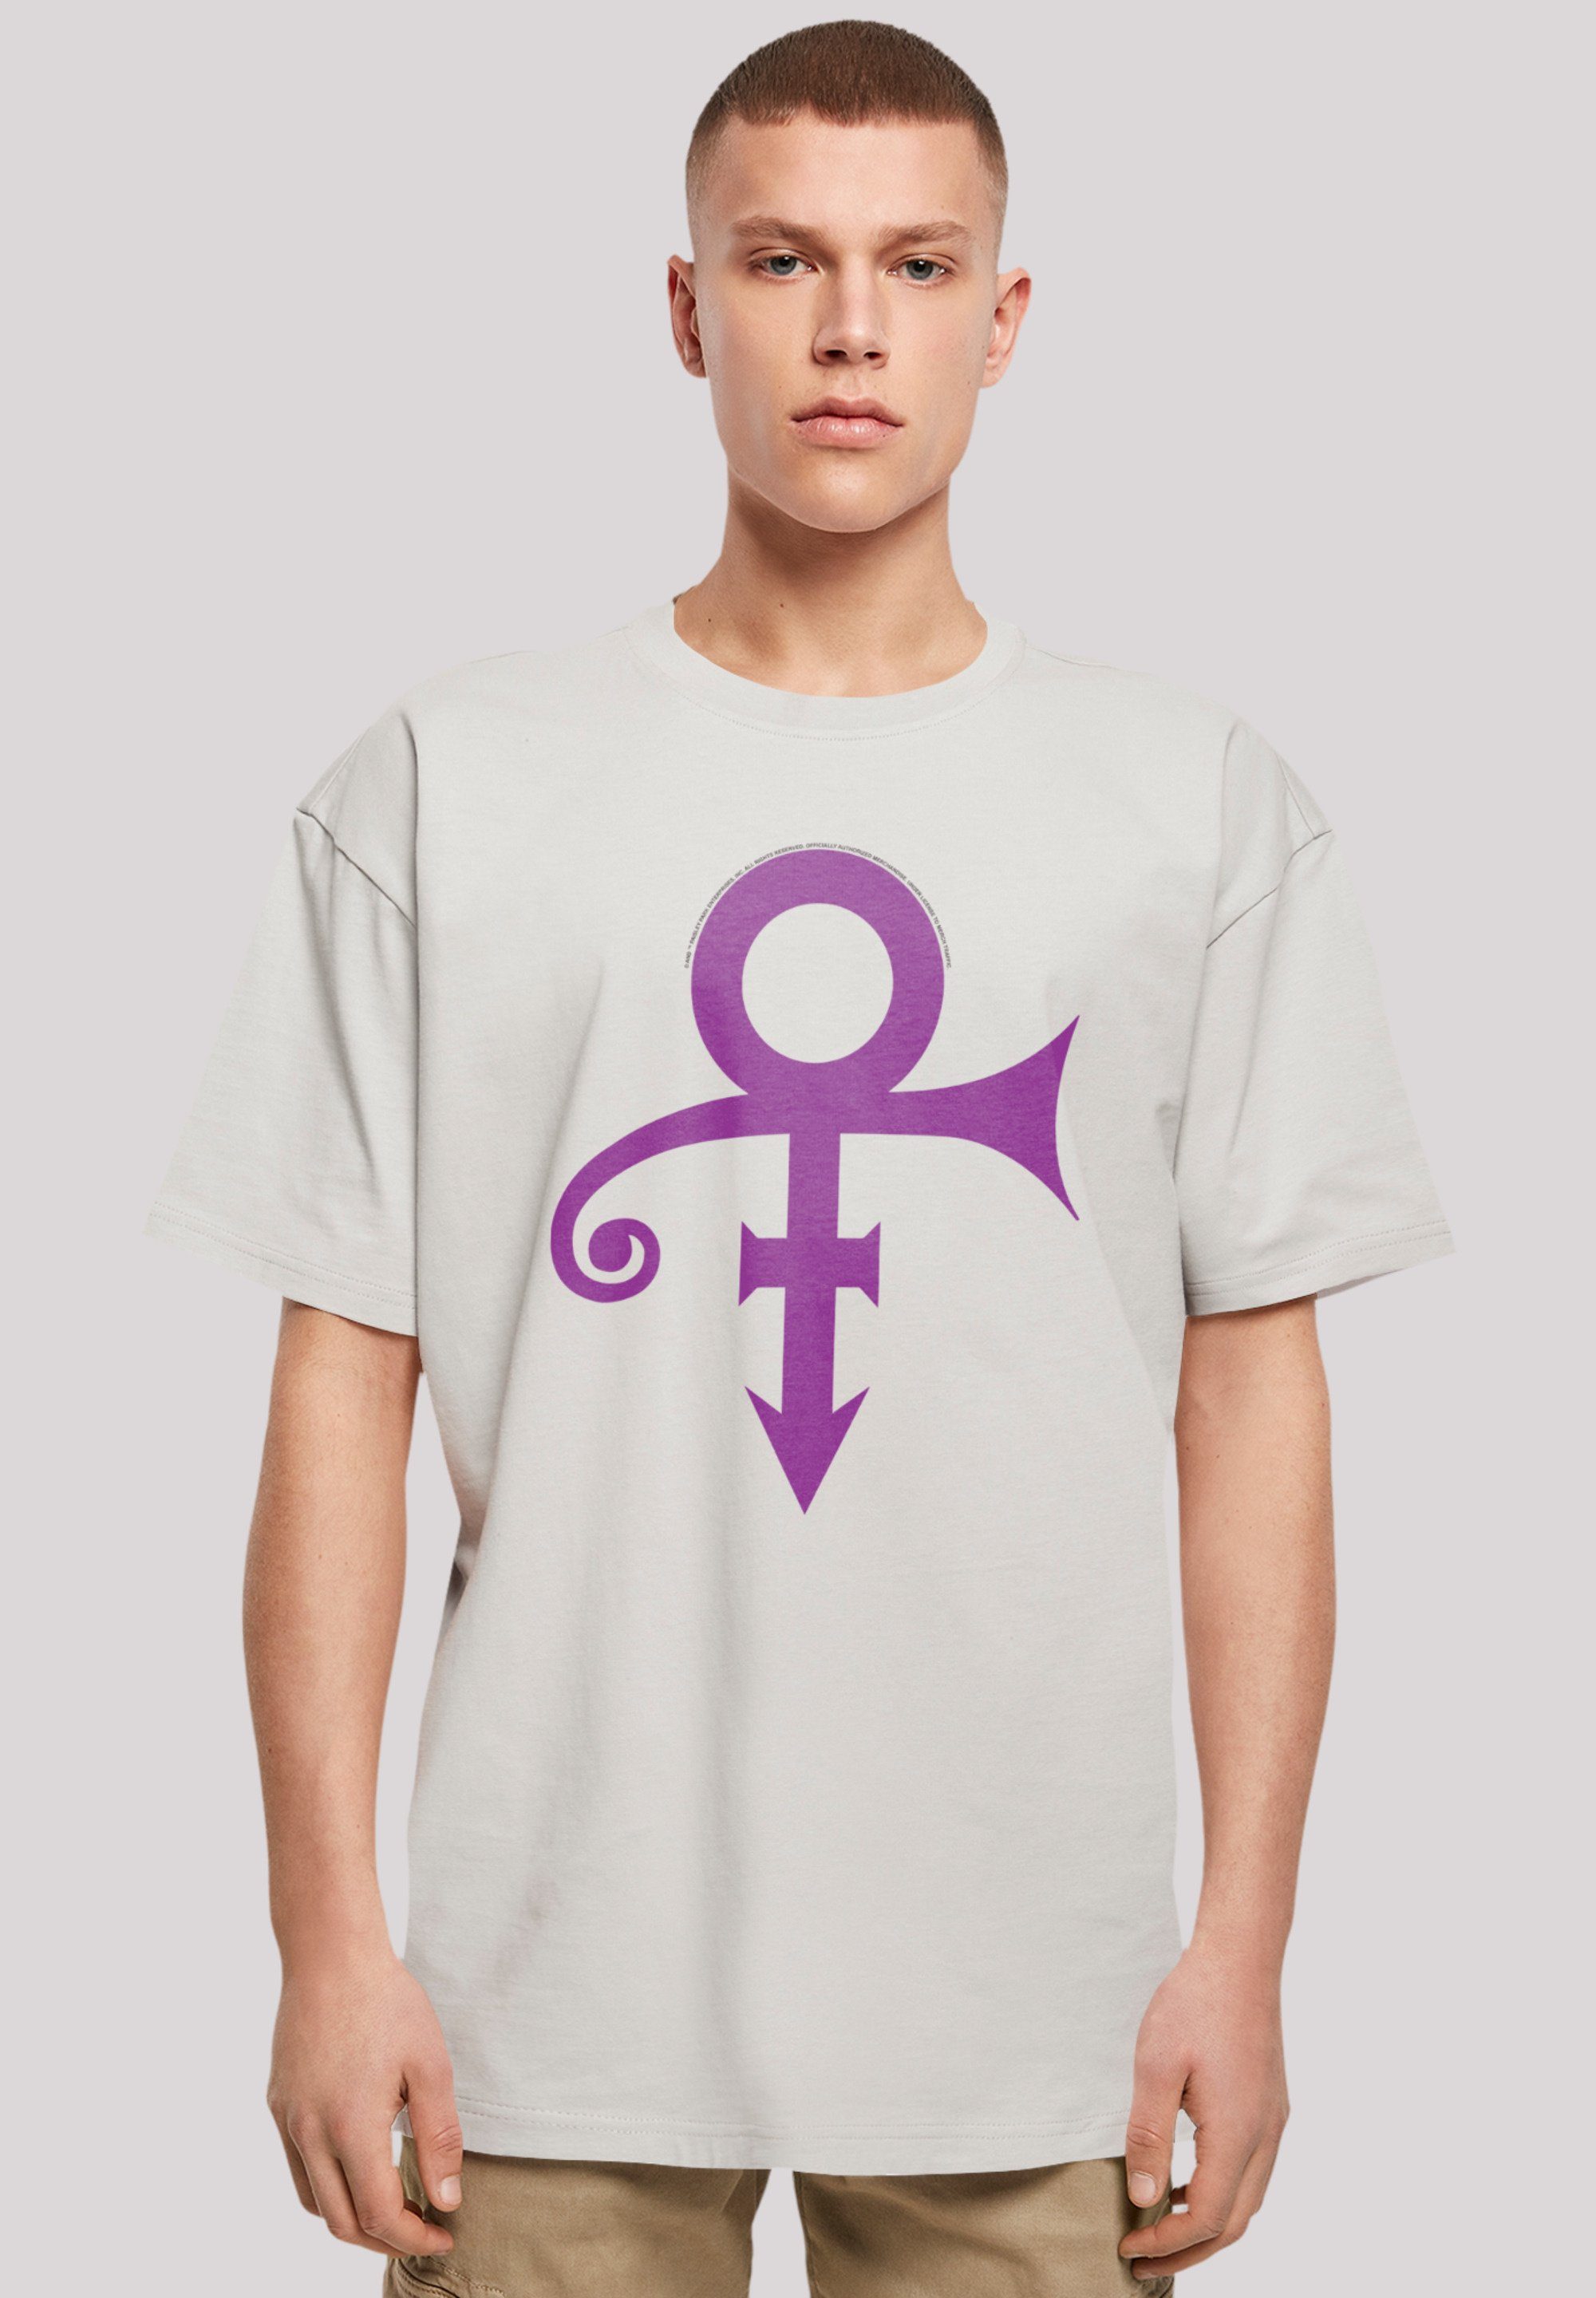 F4NT4STIC T-Shirt Prince Musik Album Logo Premium Qualität, Rock-Musik, Band lightasphalt